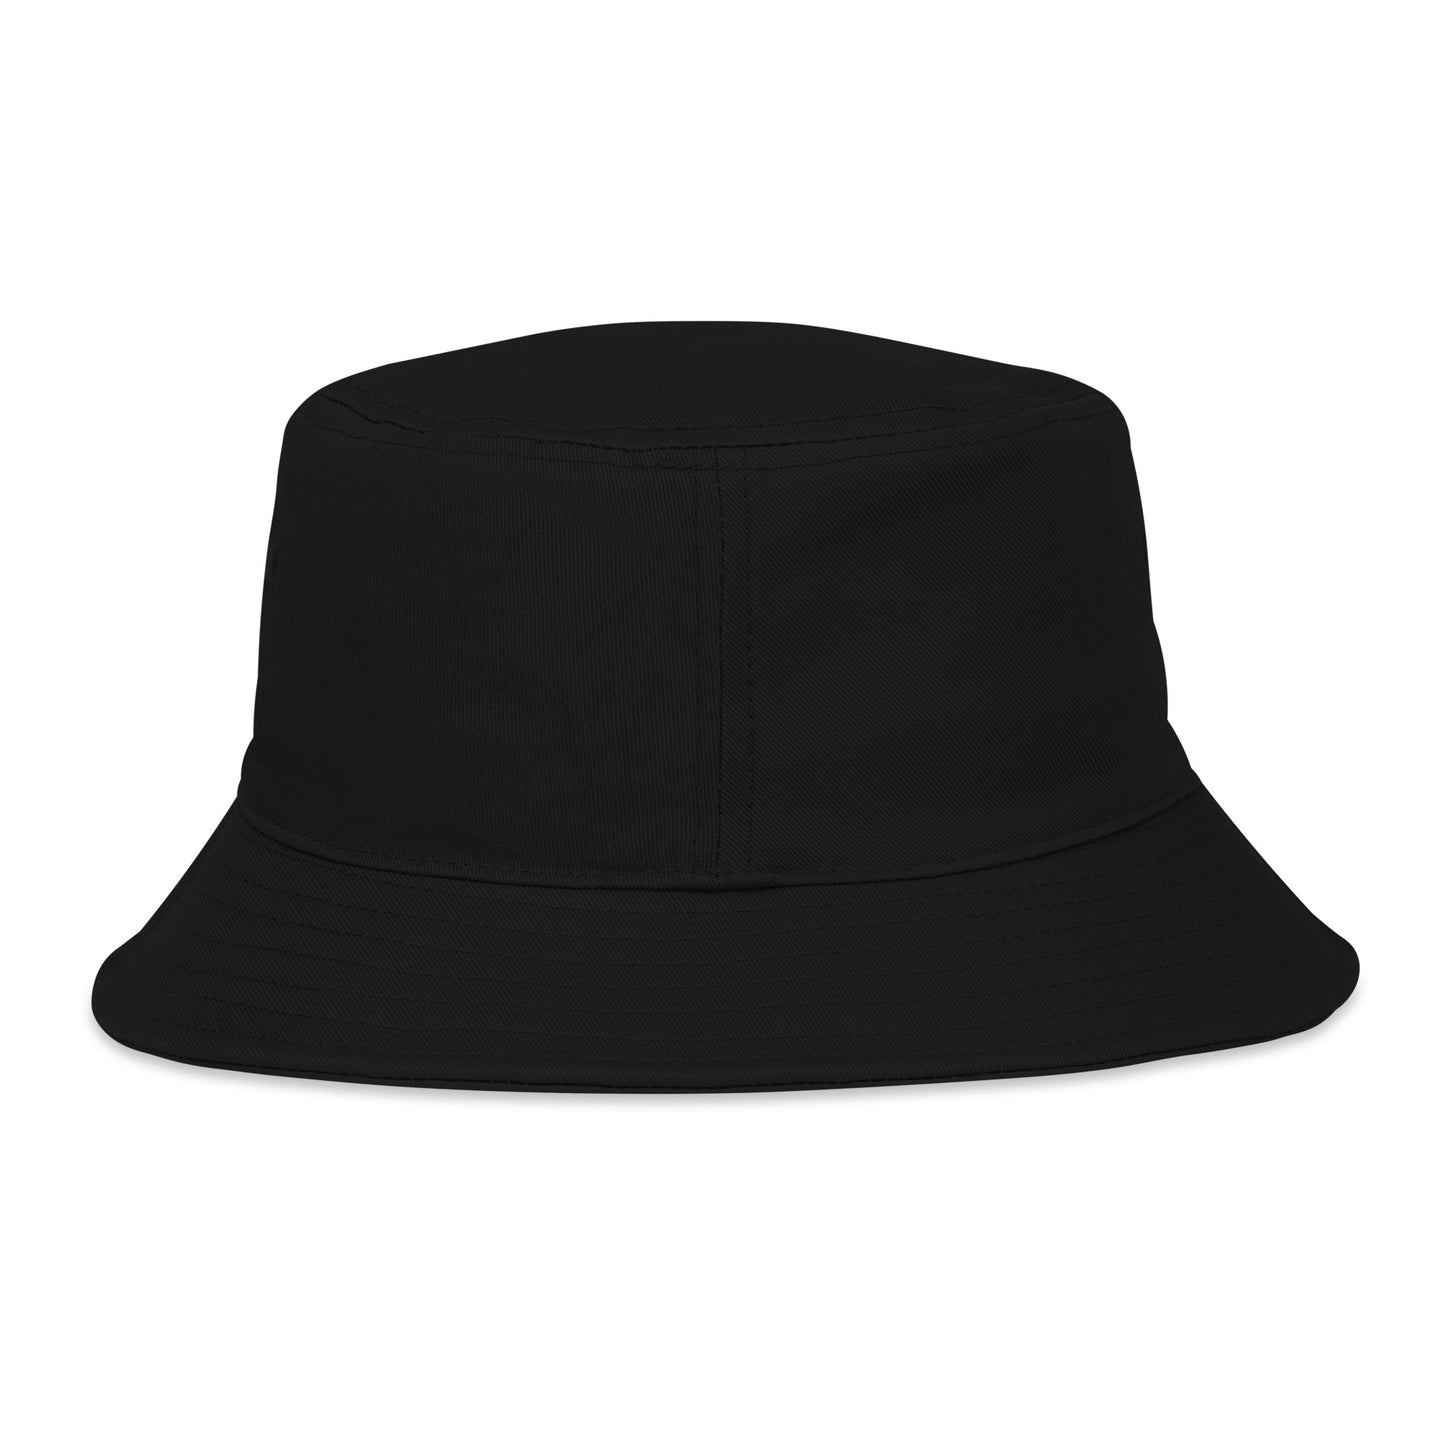 Universal bucket hat